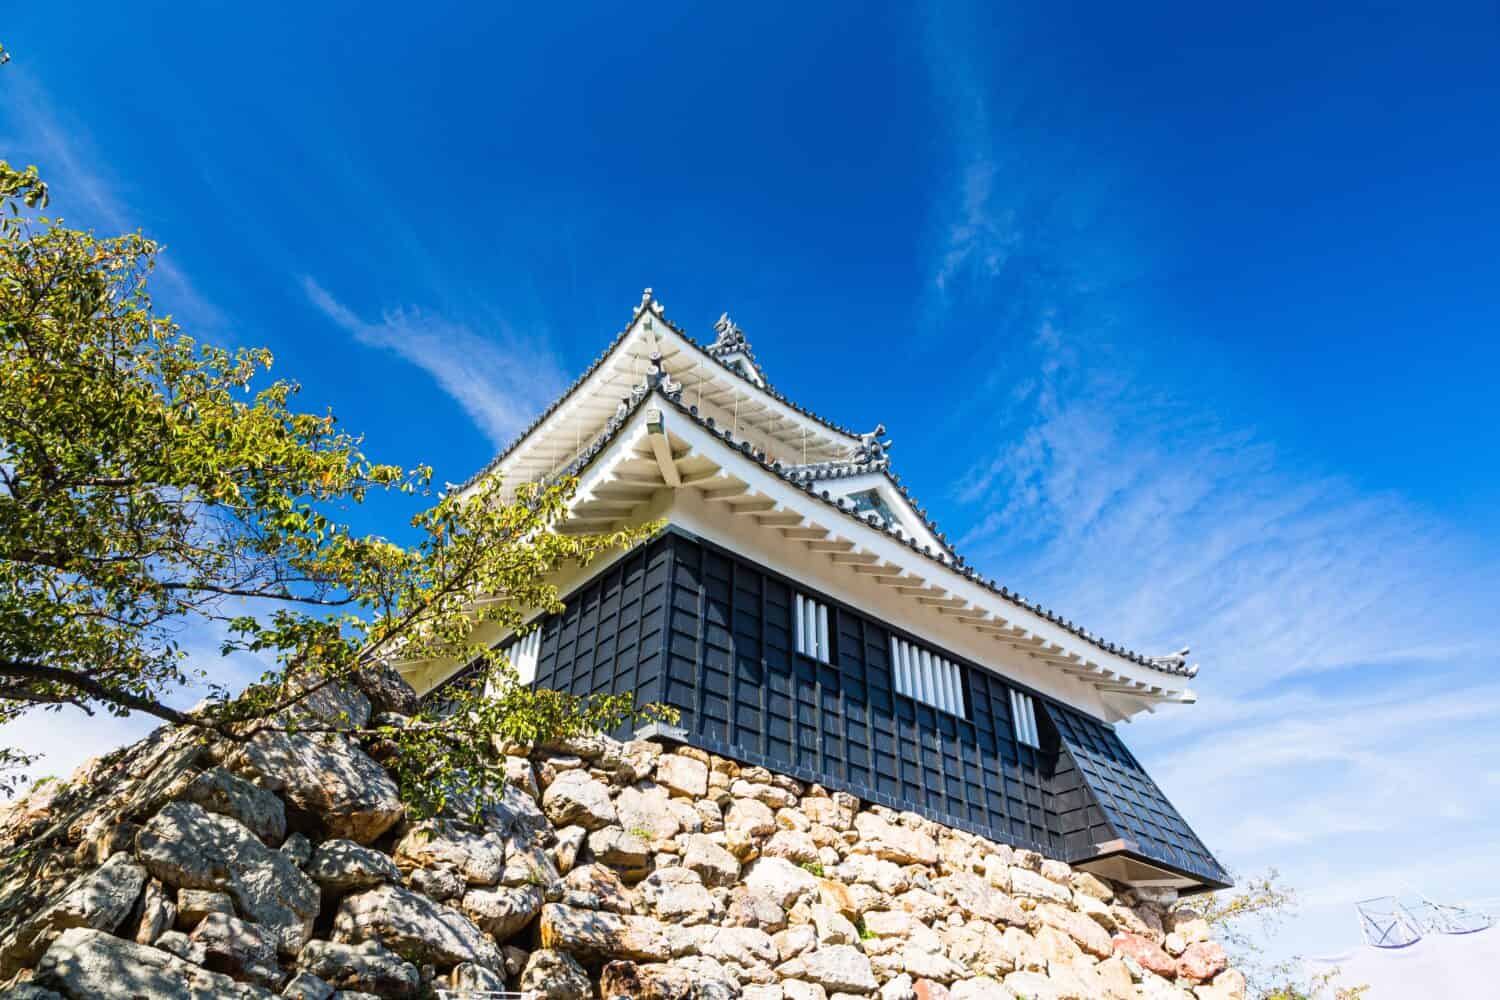 The keep of Hamamatsu Castle in Hamamatsu City, Shizuoka Prefecture, Japan